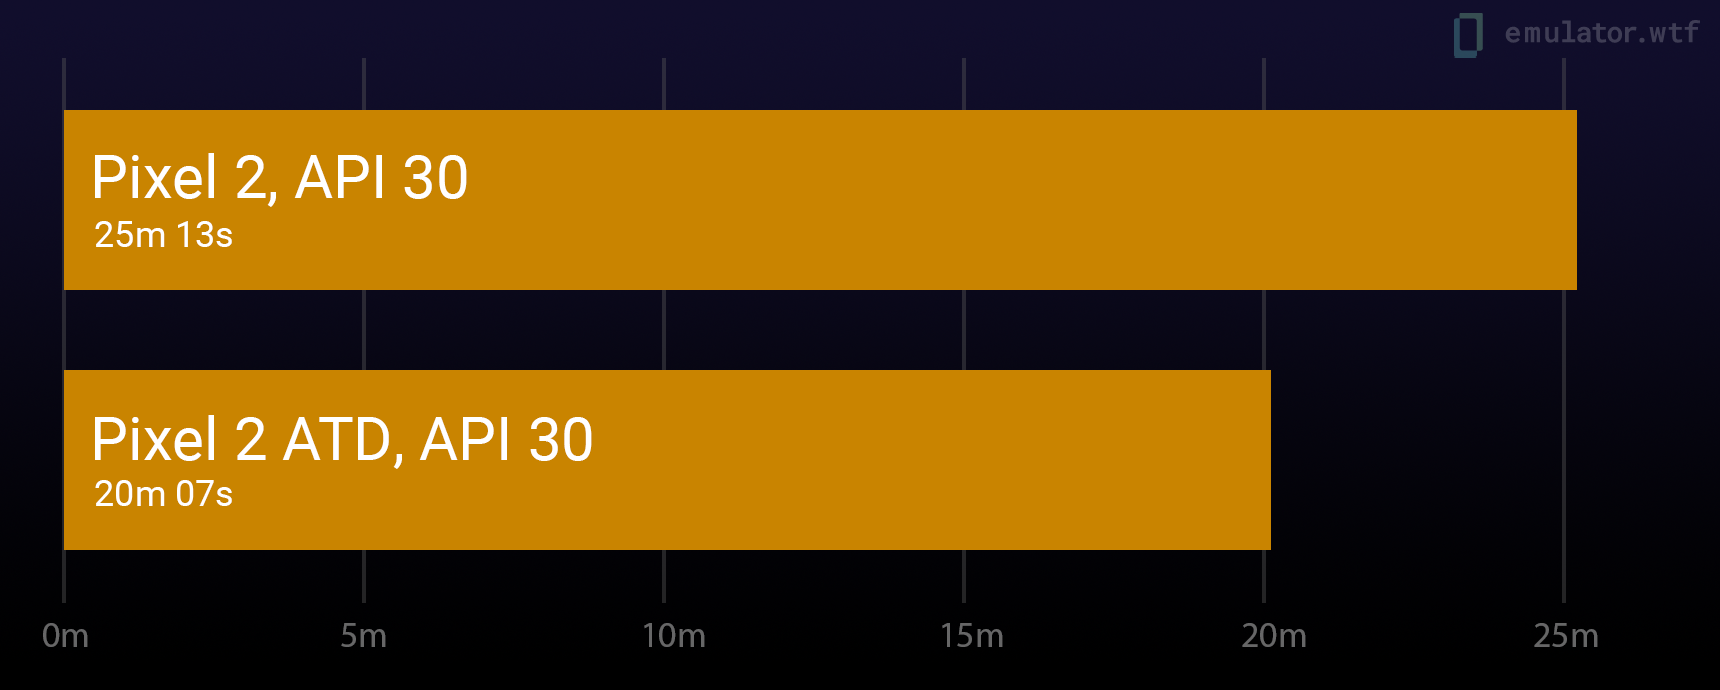 A side-by-side comparison of Pixel2 API 30 (25m test duration) vs Pixel2 API 30 Atd (20m test duration)